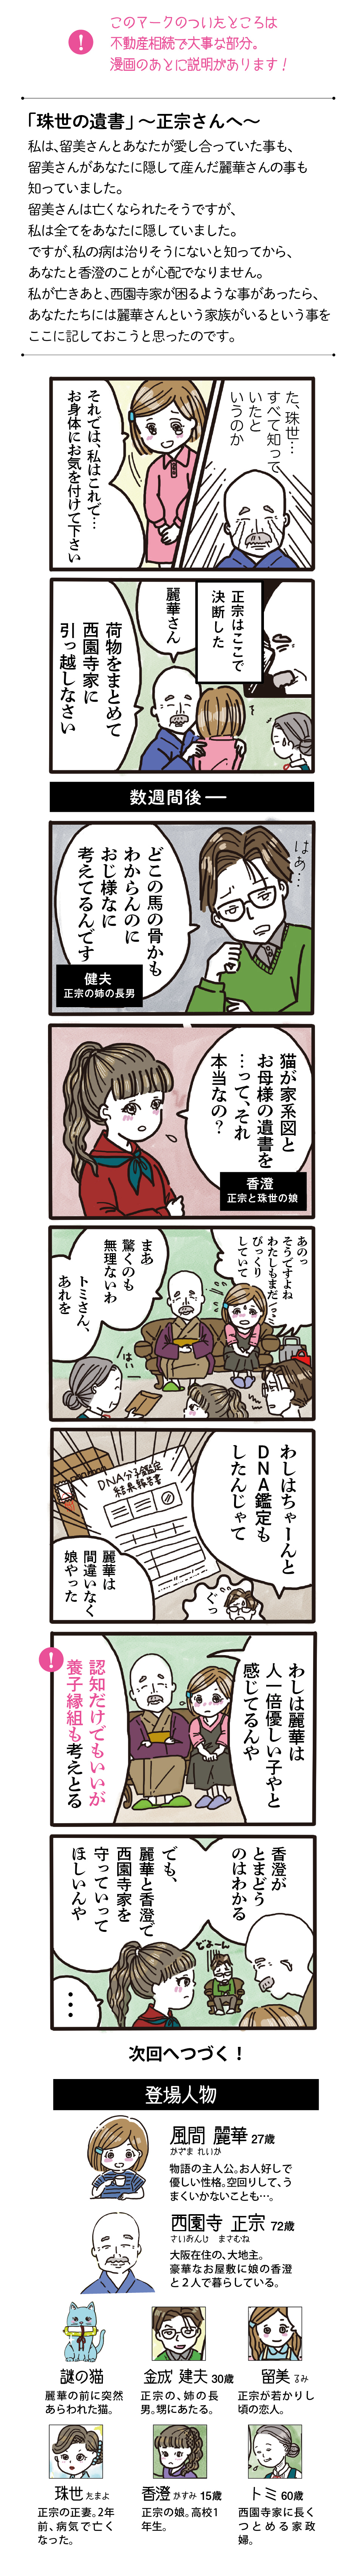 【web漫画】華麗なるSOUZOKU  #7